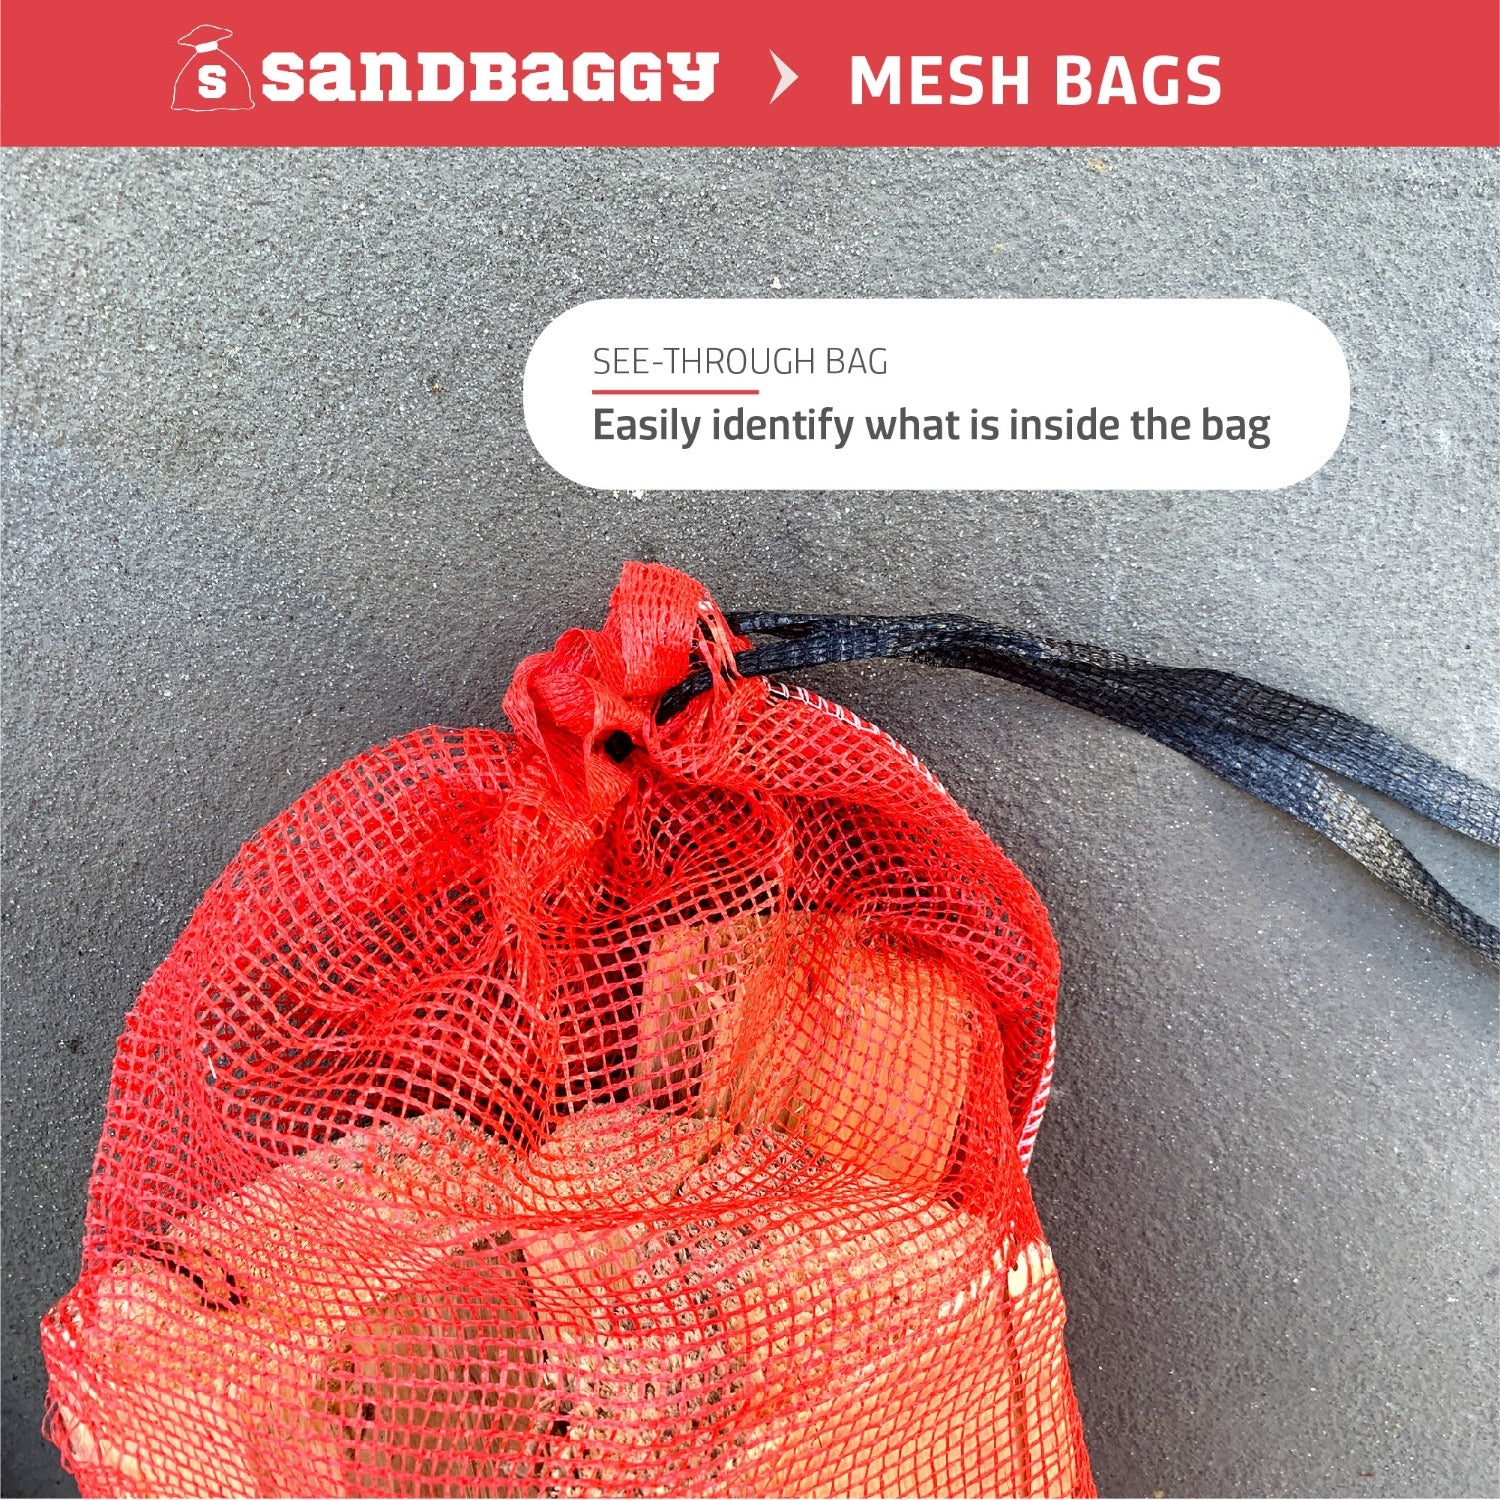 Onion Reusable Mesh Produce Bags (50 lb.) - Sandbaggy